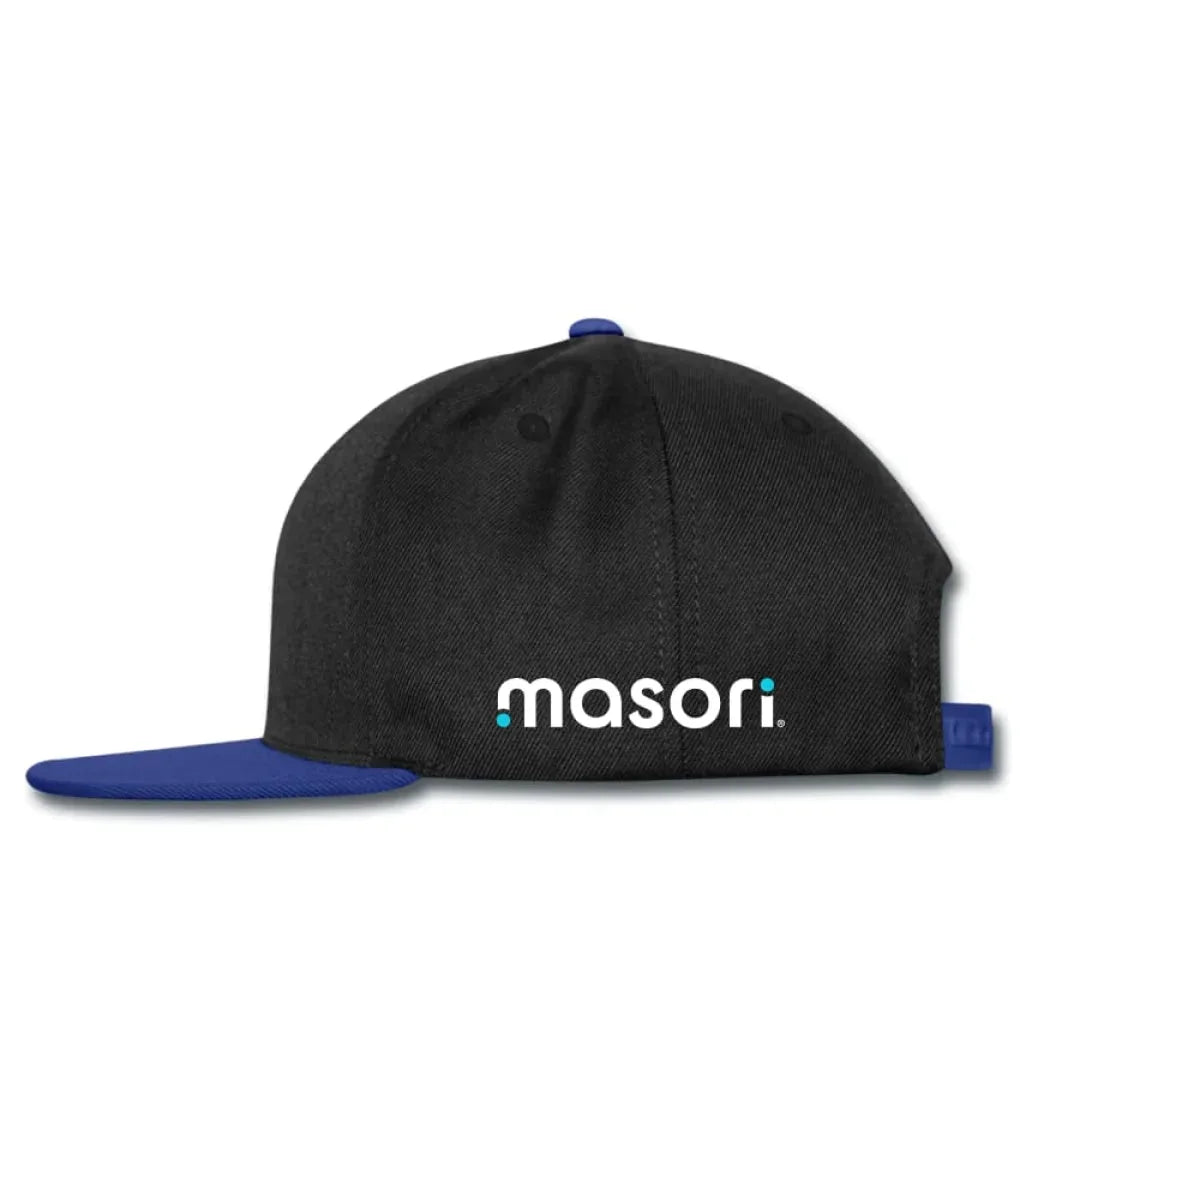 Masori-Masori - Snapback Cap-Cap-Masori.de